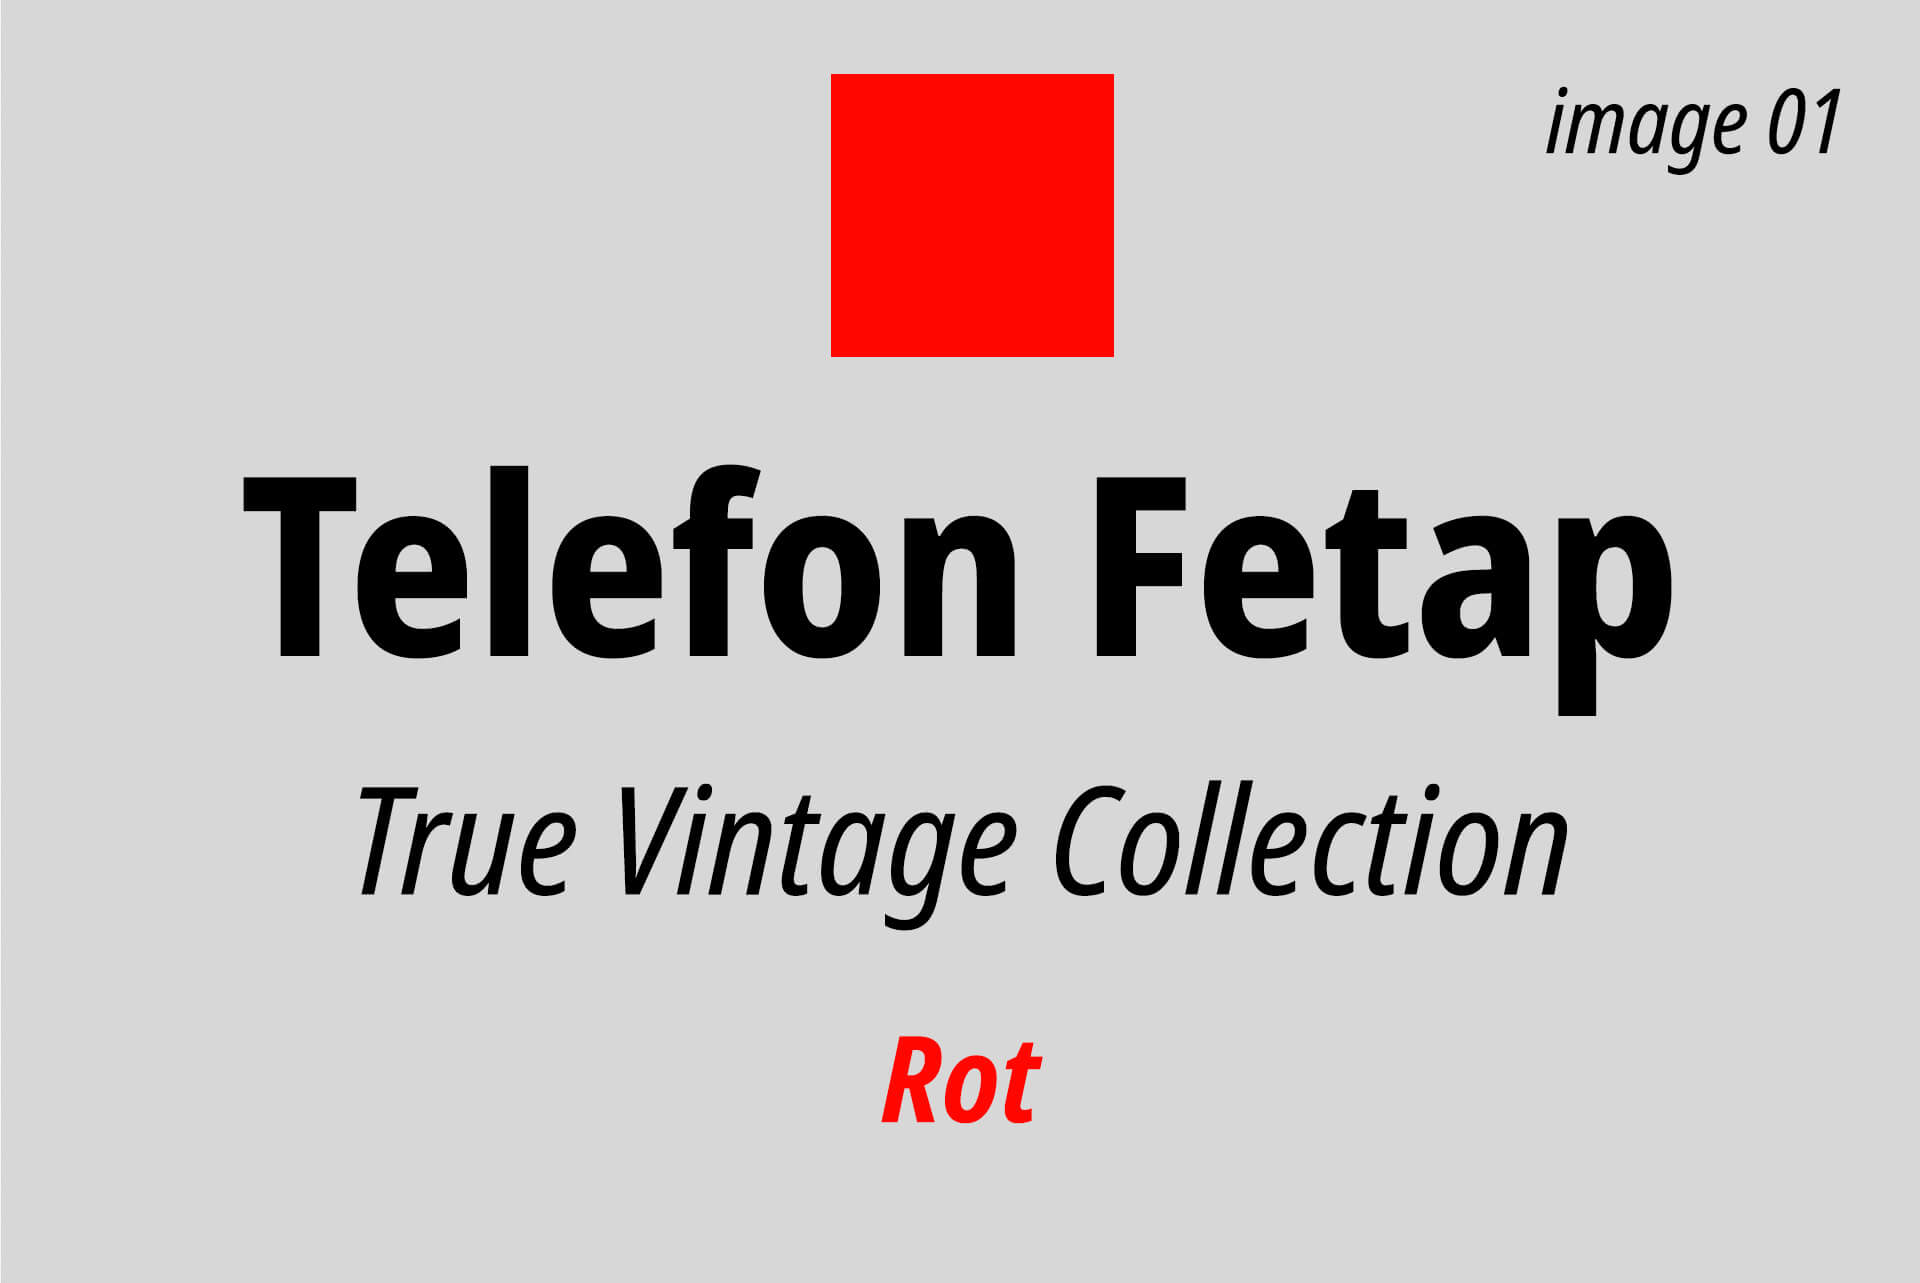 telefon-fetapp-rot-image-01